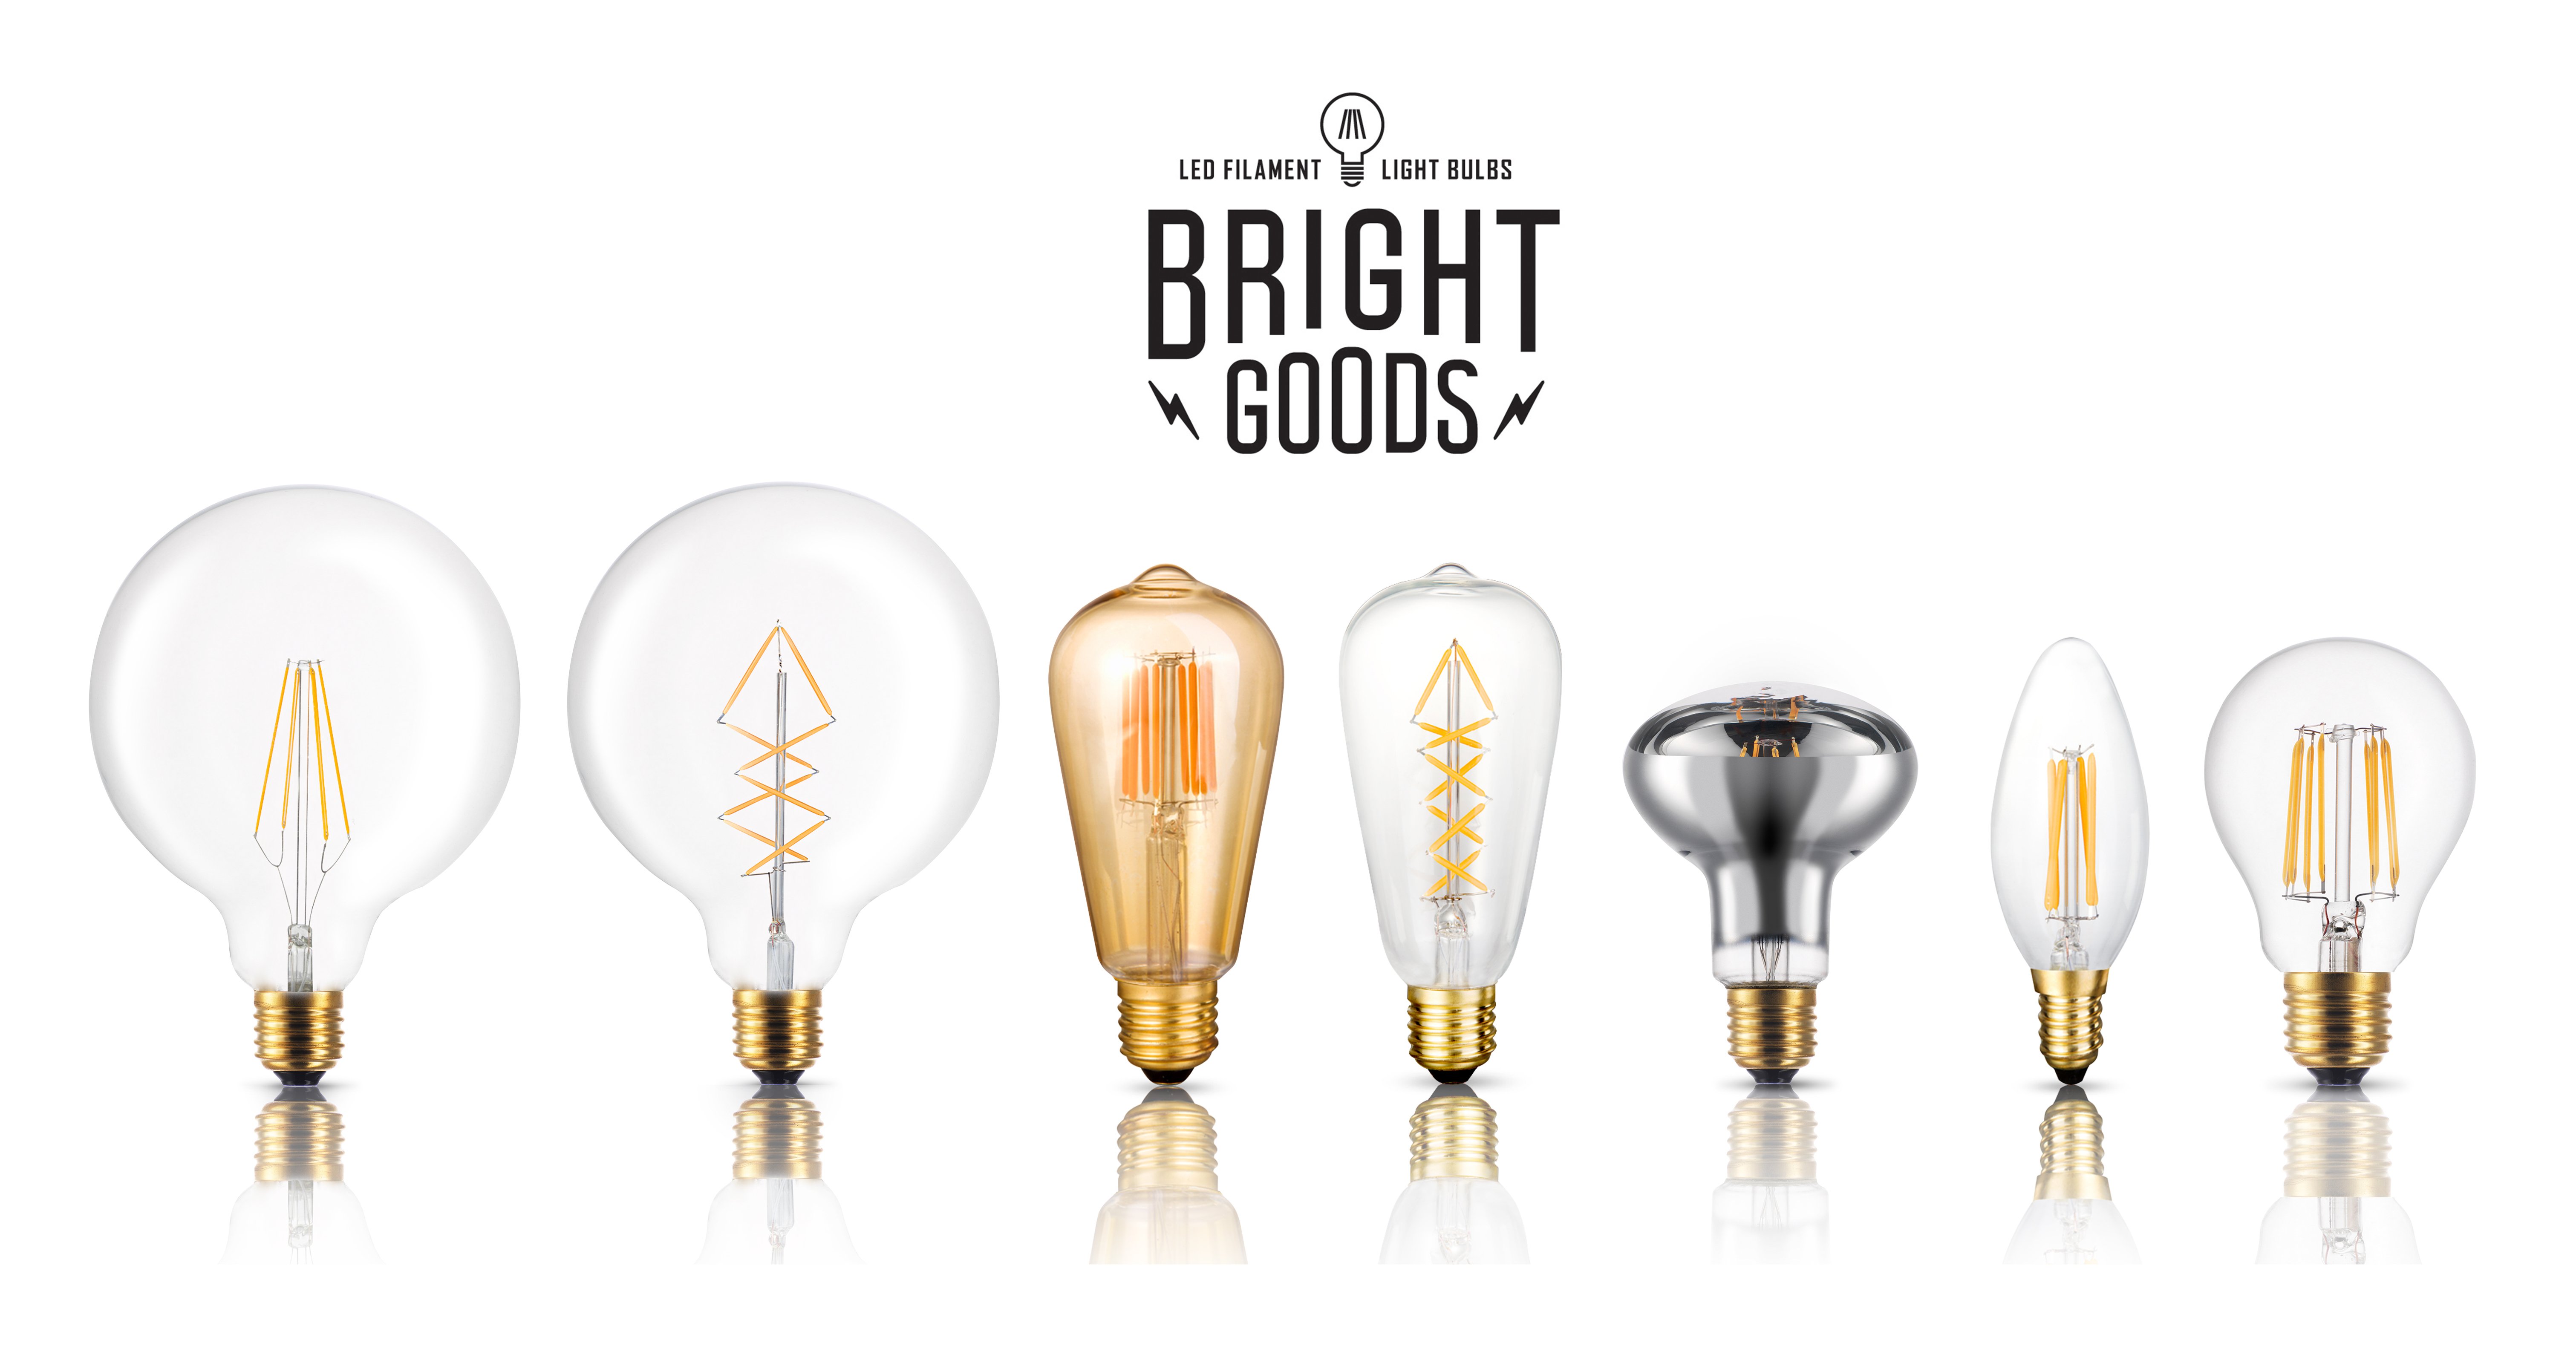 Bright Goods LED filament light bulbs Line Up